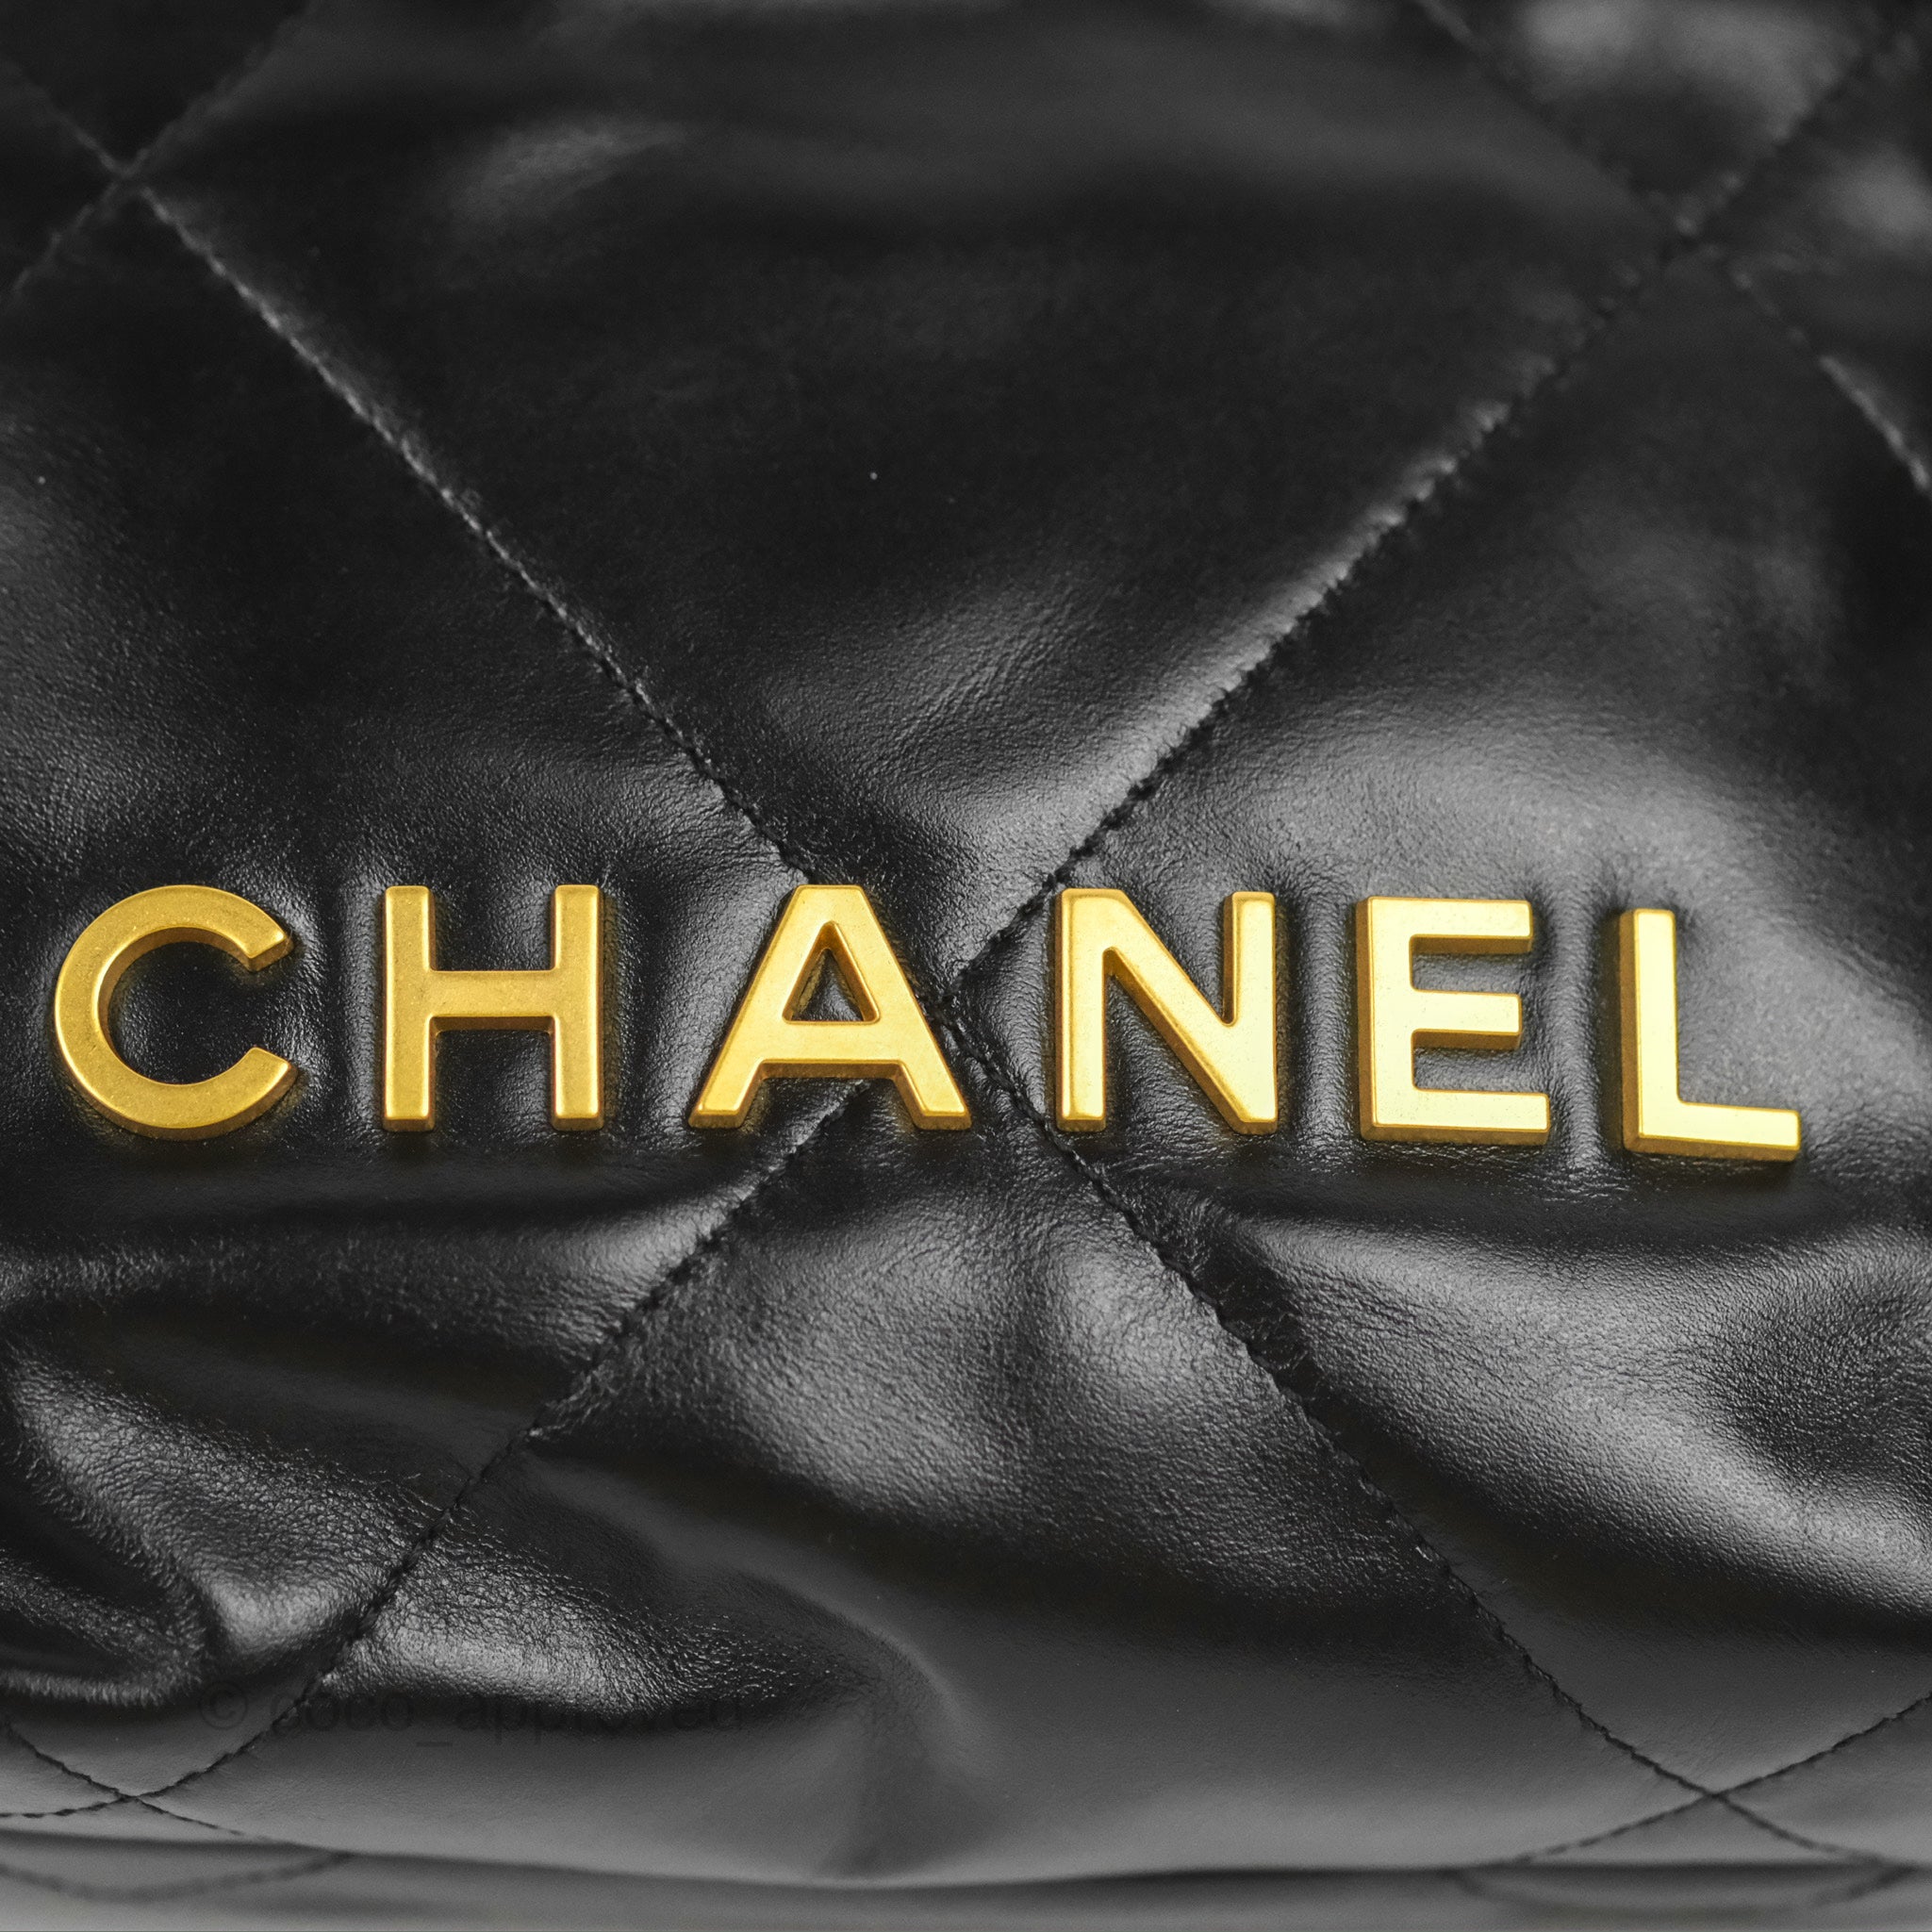 CHANEL, Bags, Chanel 22 So Black Large Bag